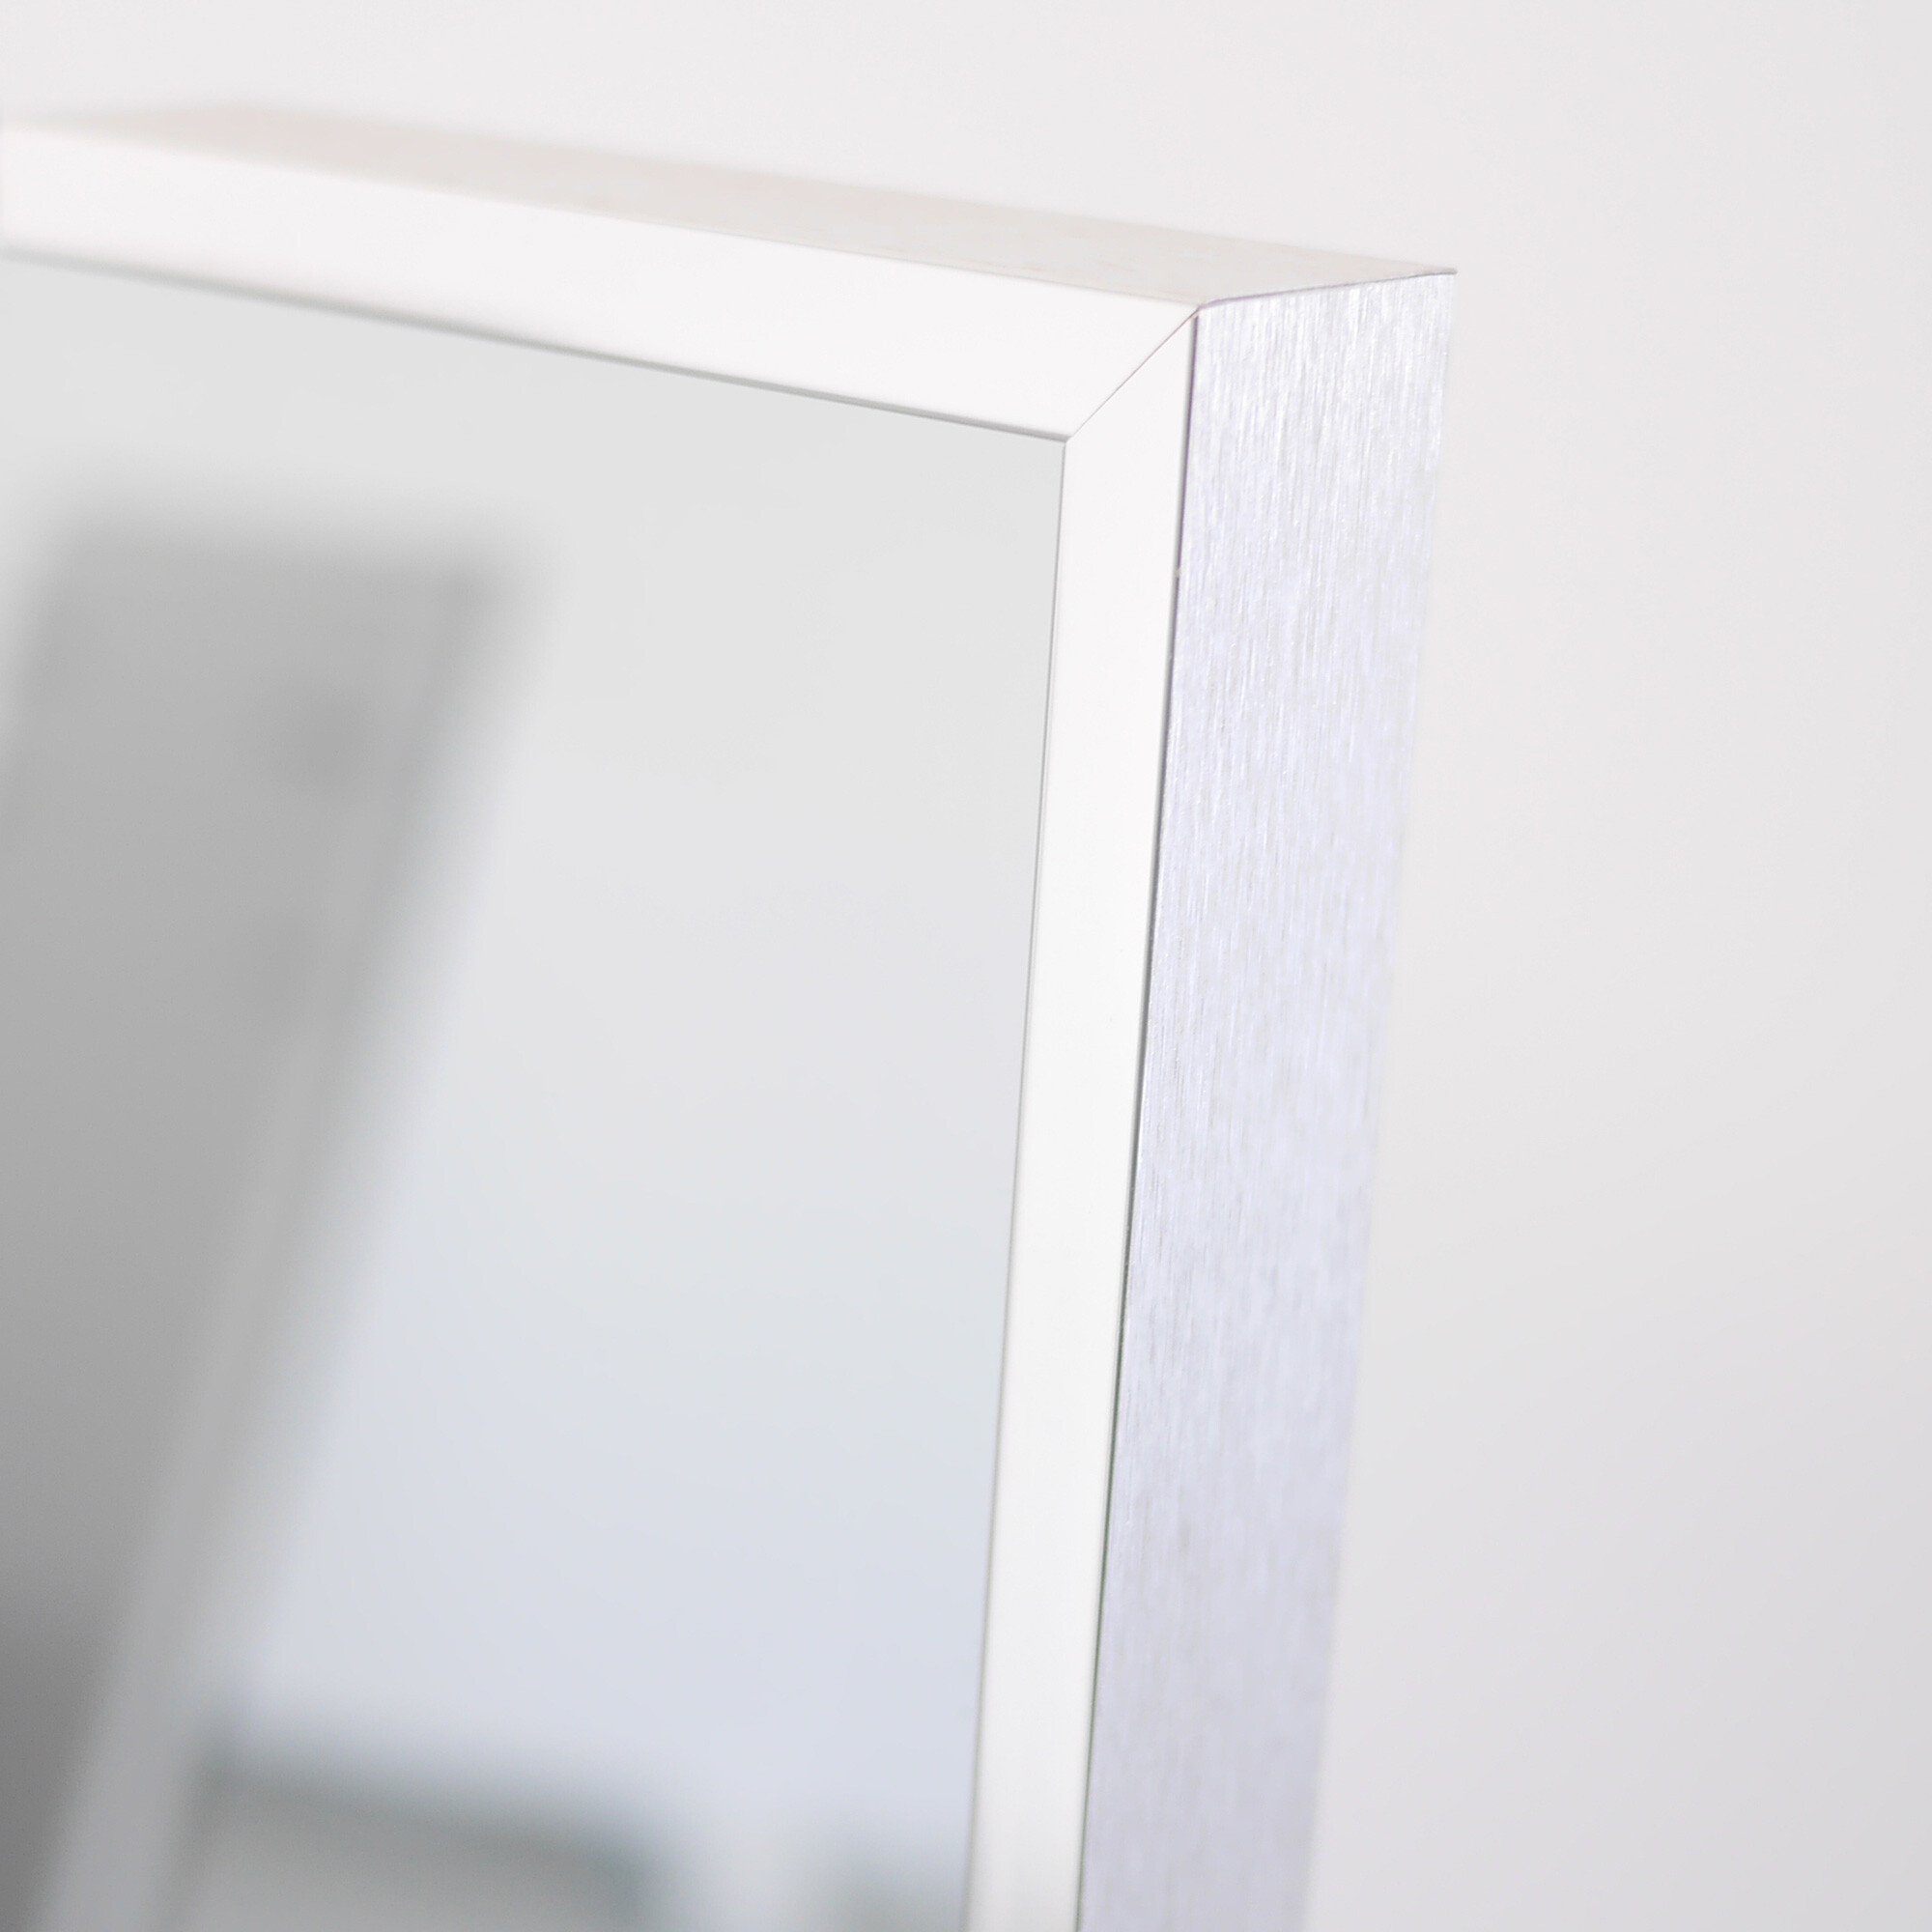 glass mirror radiant heat panel with stylish chrome frame